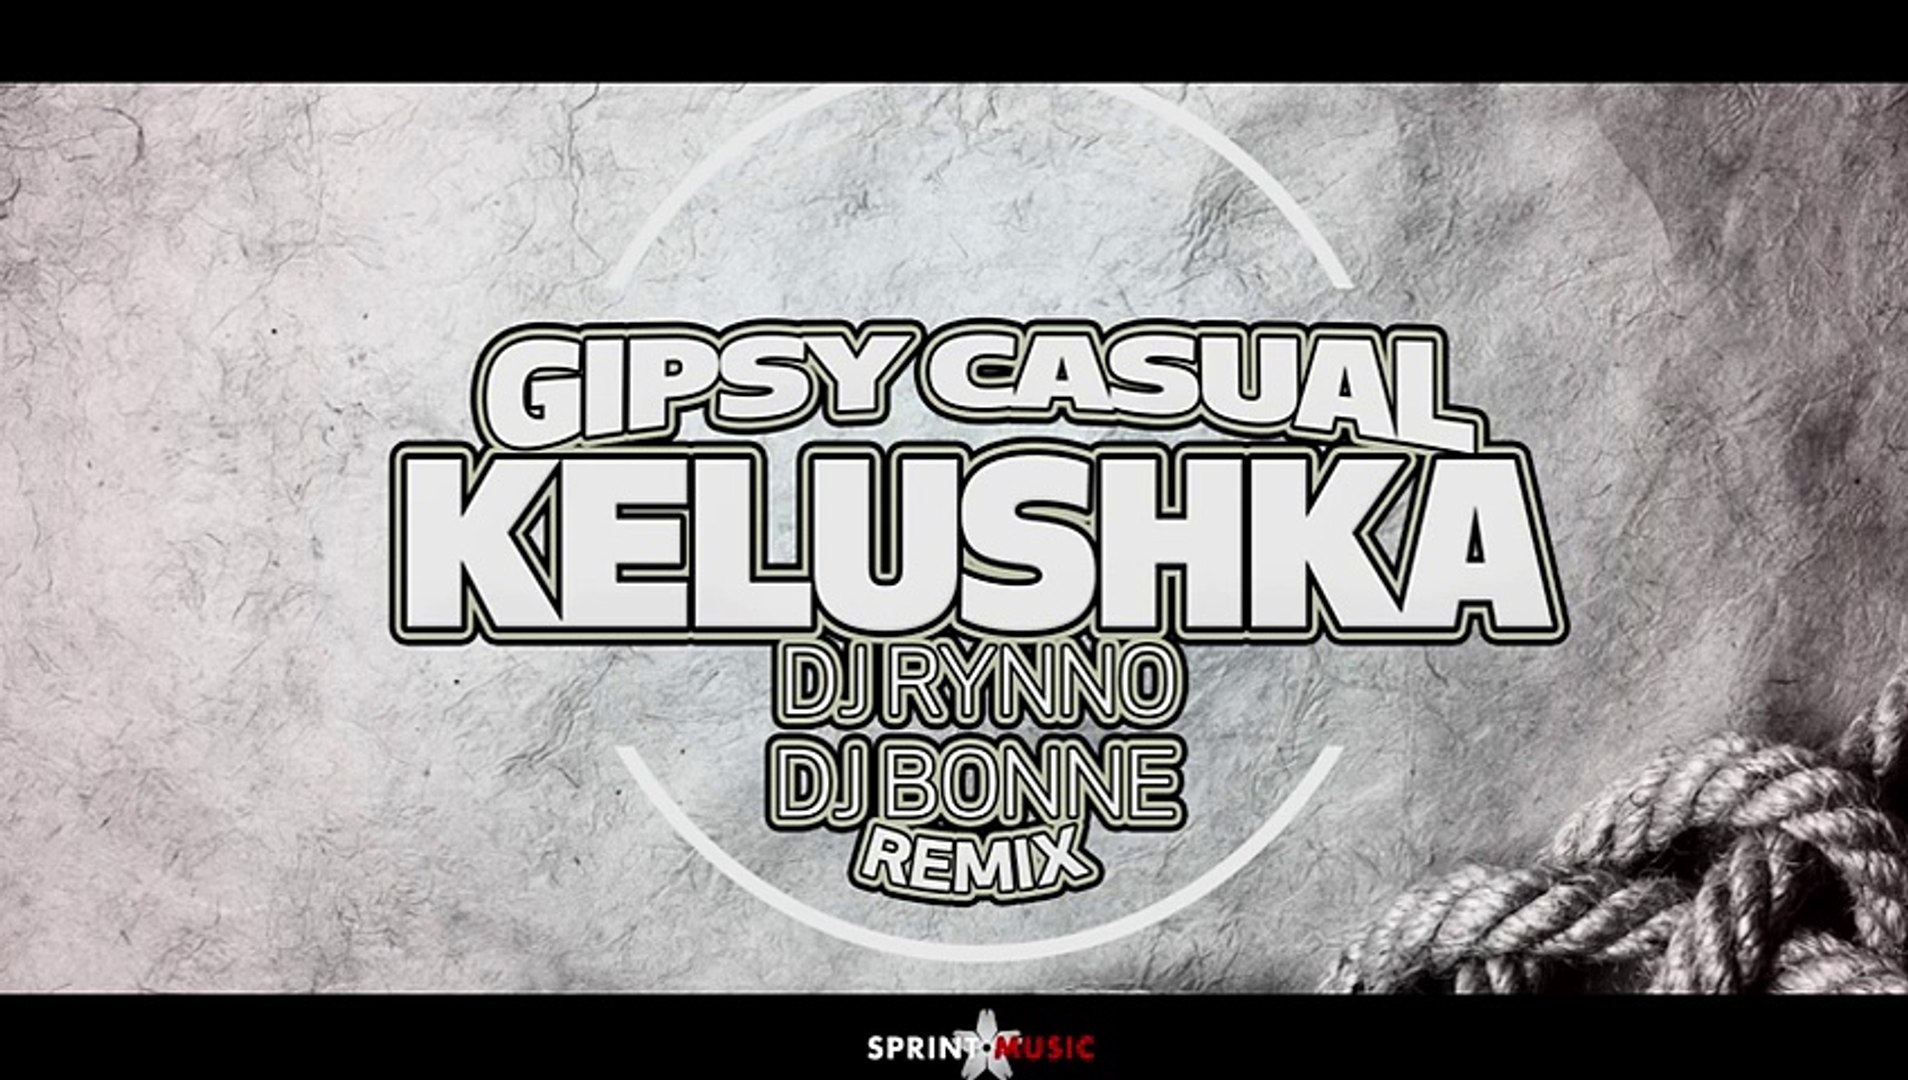 Gipsy Casual - Kelushka - Dj Rynno..Bonne Remix - Dailymotion Video